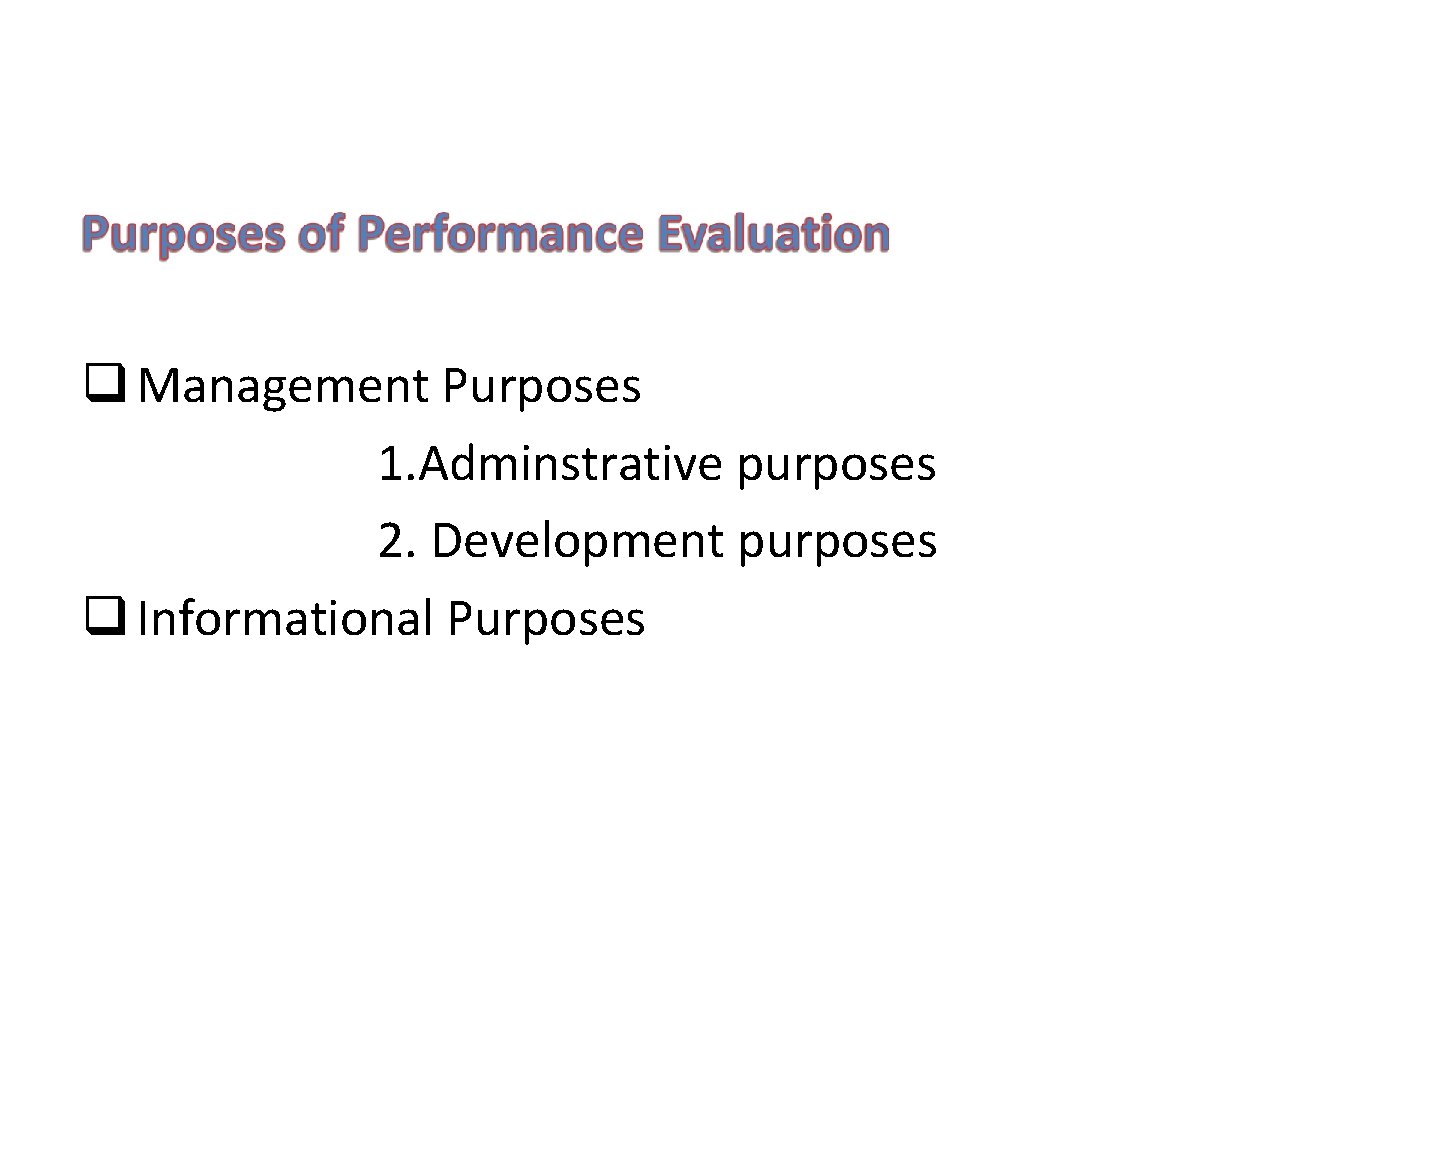  Management Purposes 1. Adminstrative purposes 2. Development purposes Informational Purposes 